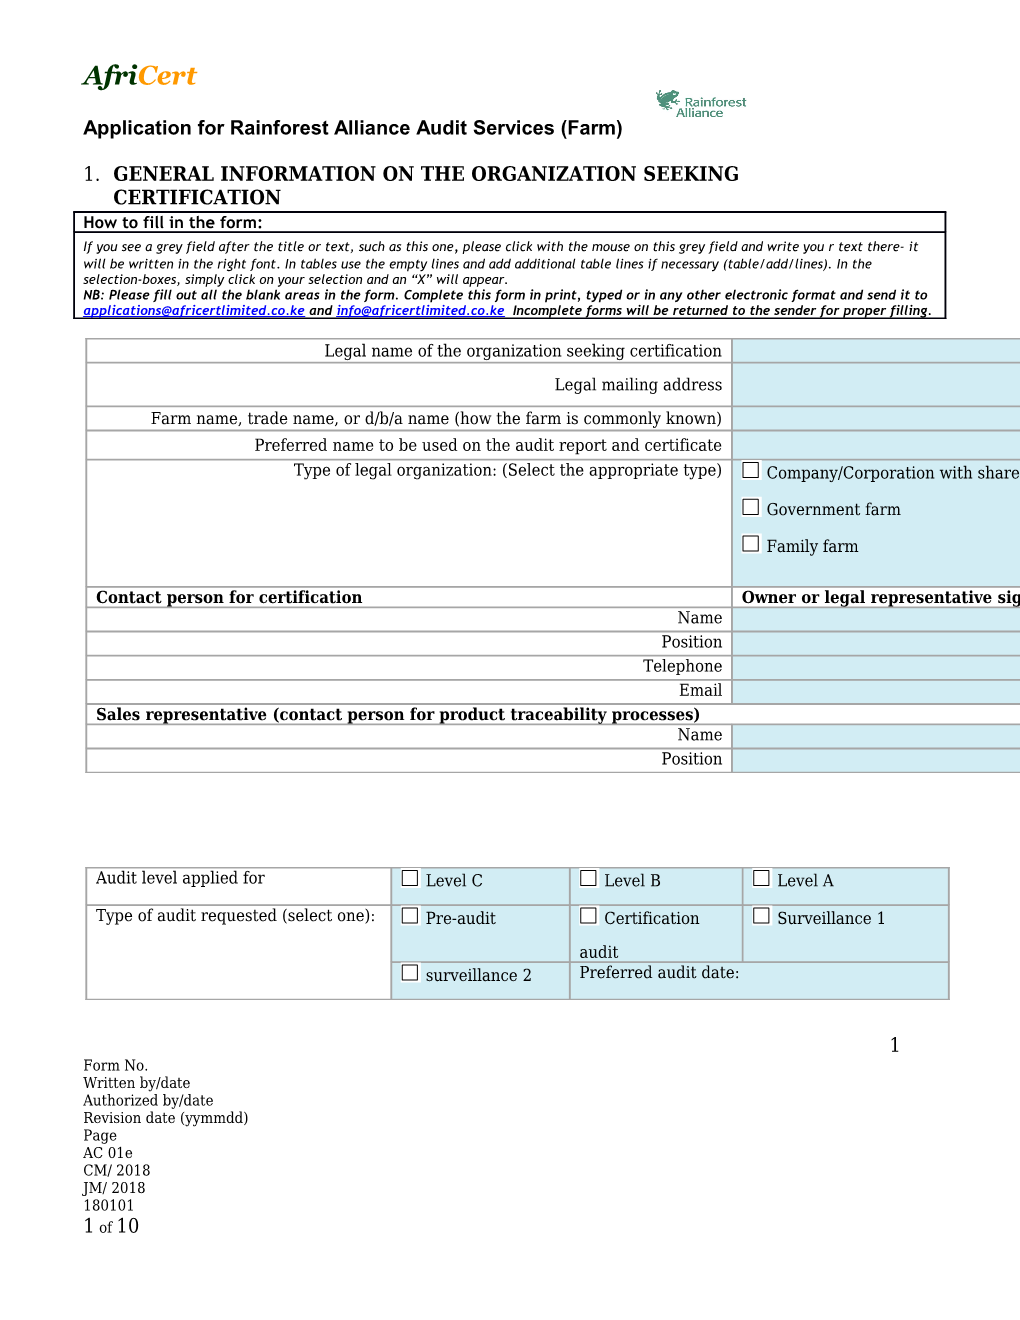 General Information on the Organization Seeking Certification